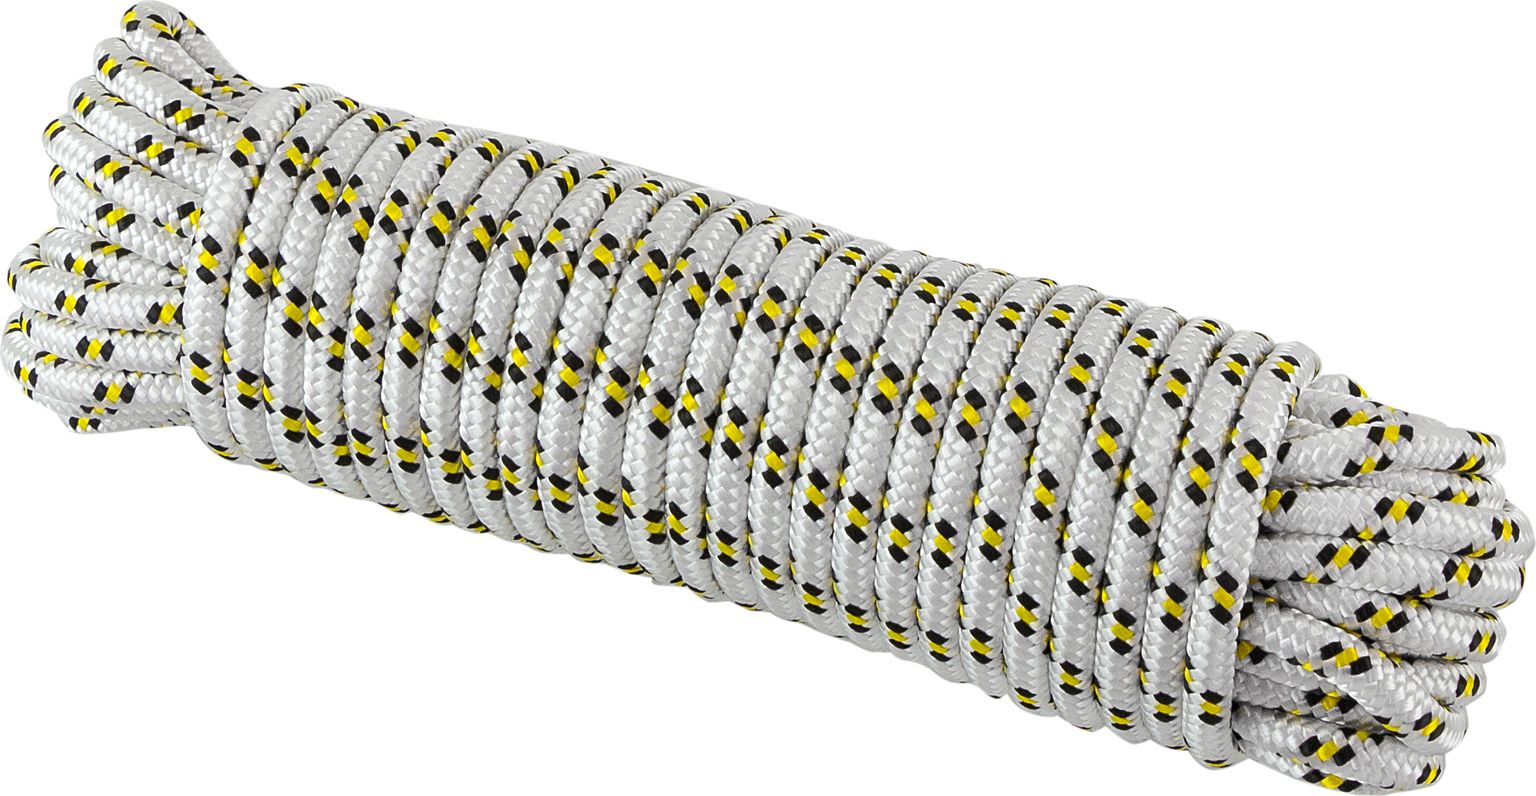 Шнур полипропиленовый плетеный d 6 мм, L 20 м SHND6L20 полипропиленовый крученый шнур сибшнур